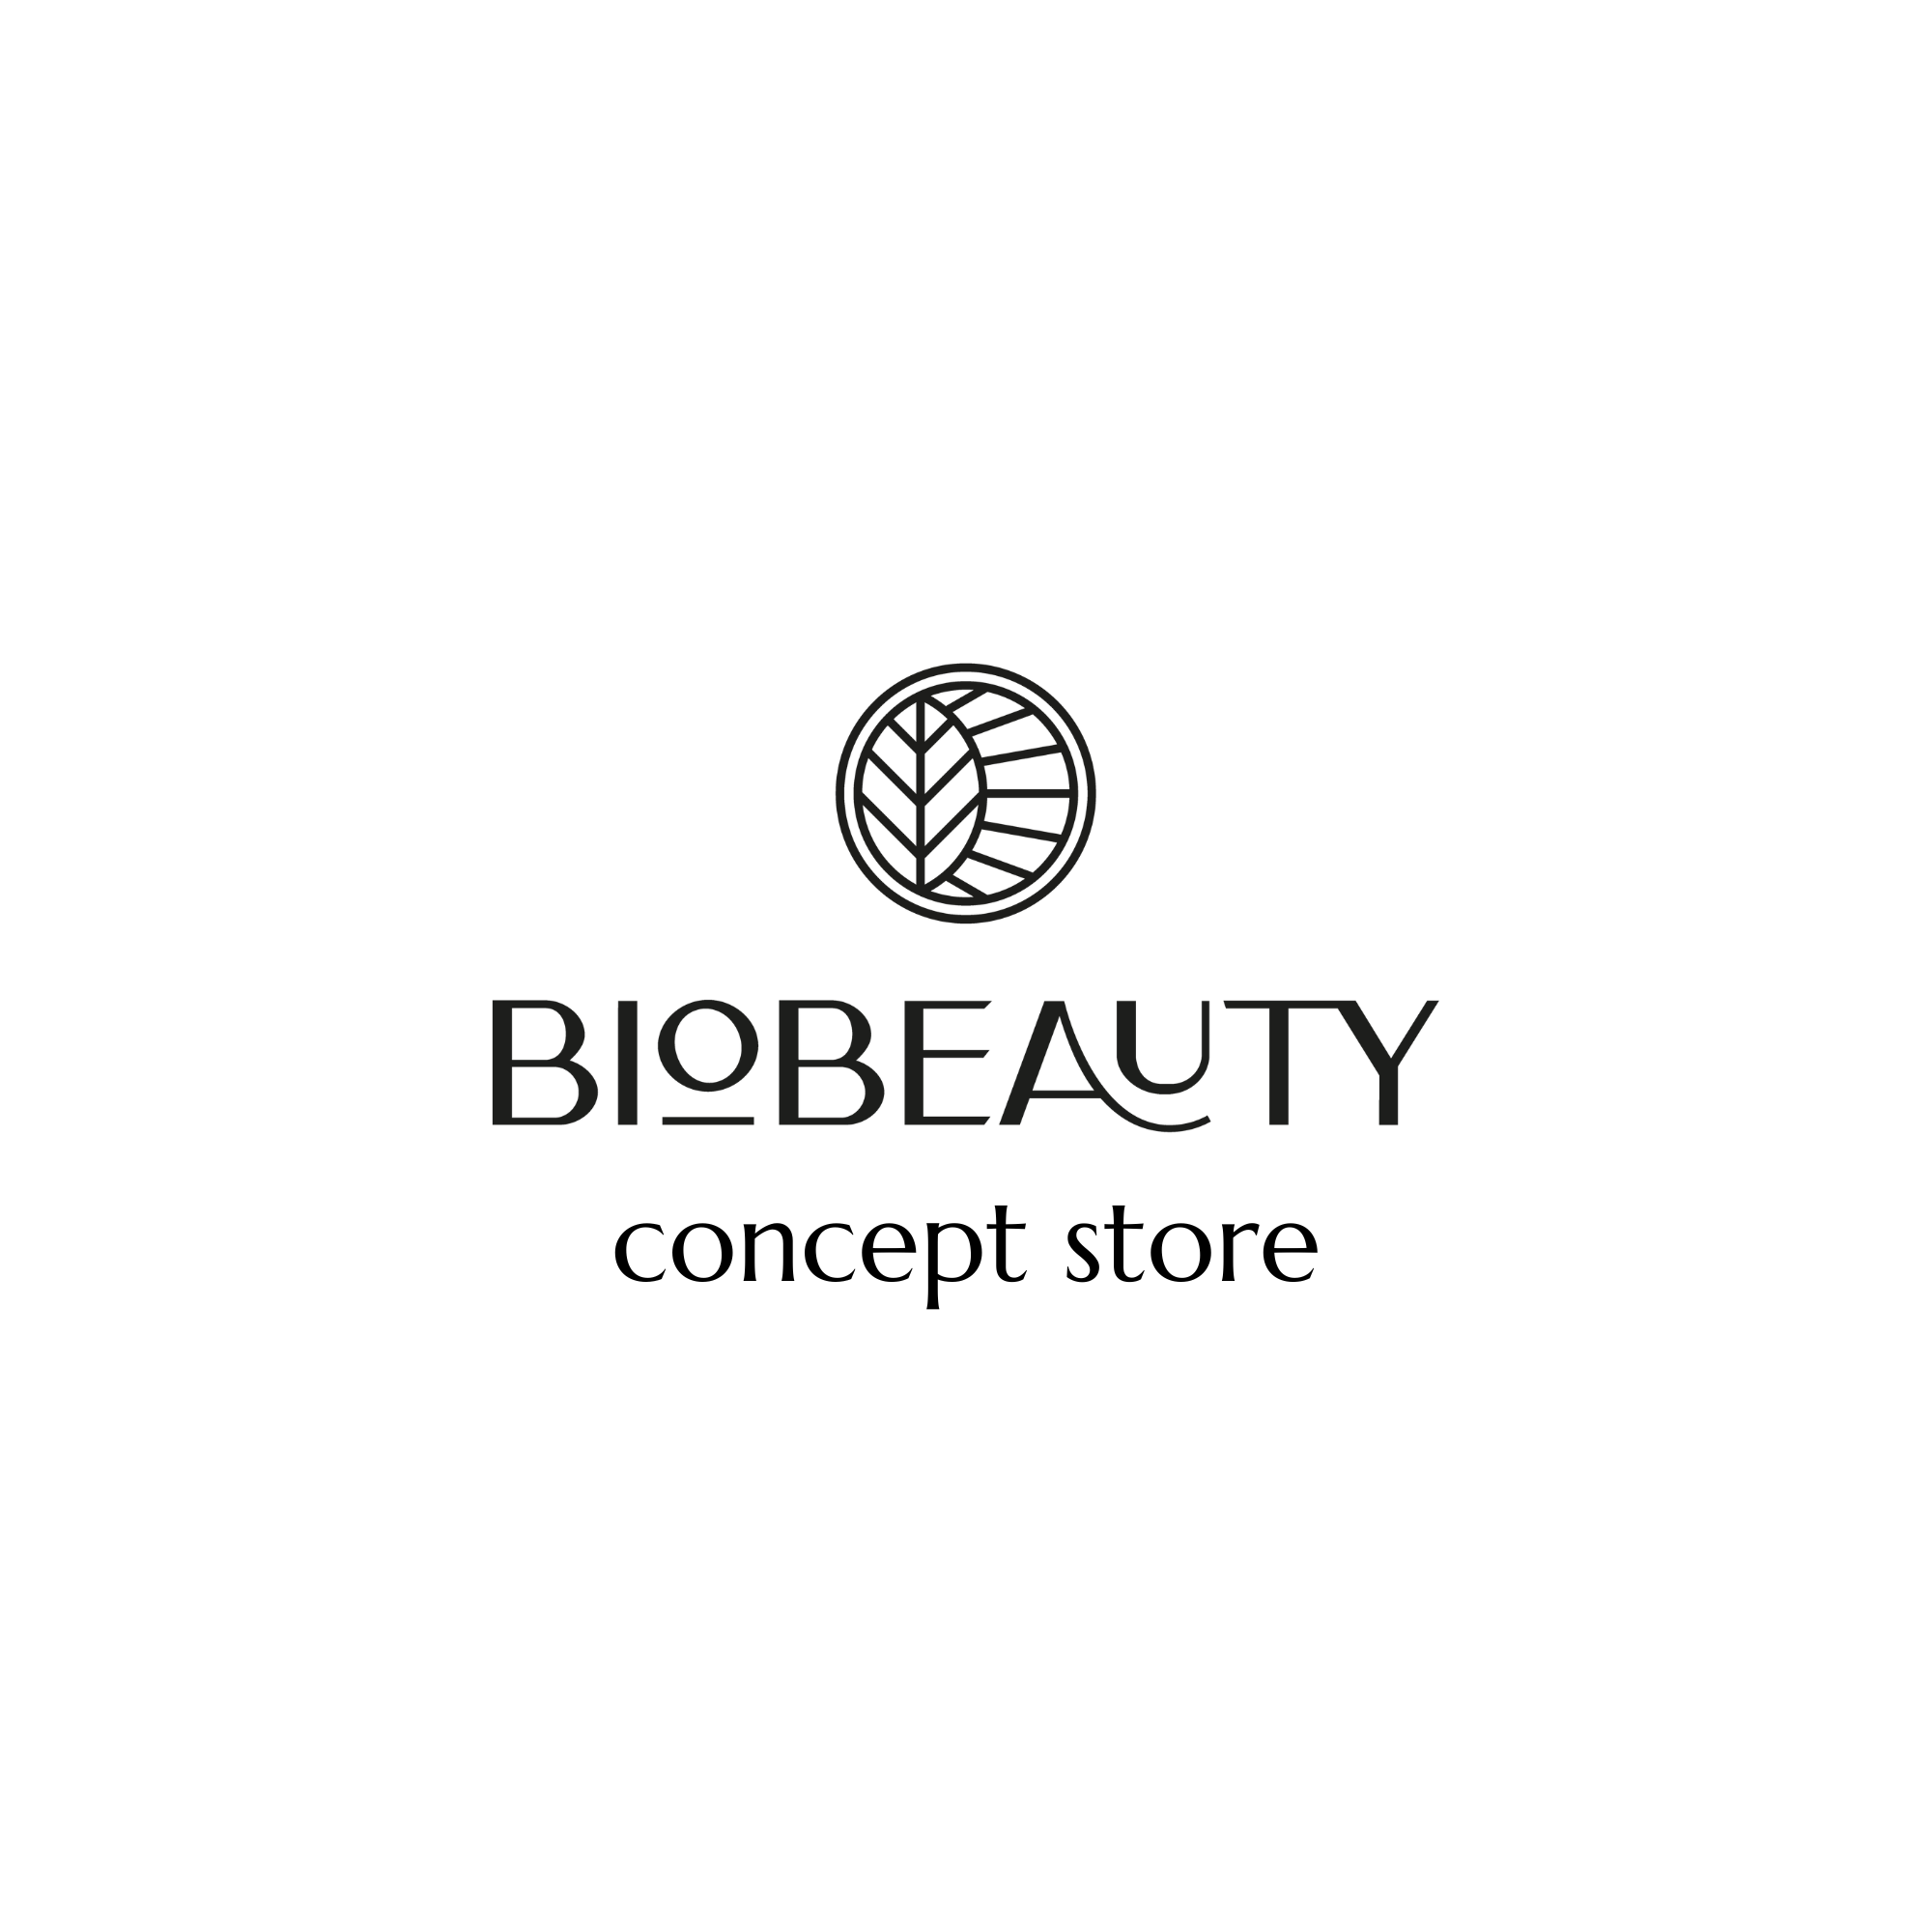 biobeauty sa mení na biobeauty concept store